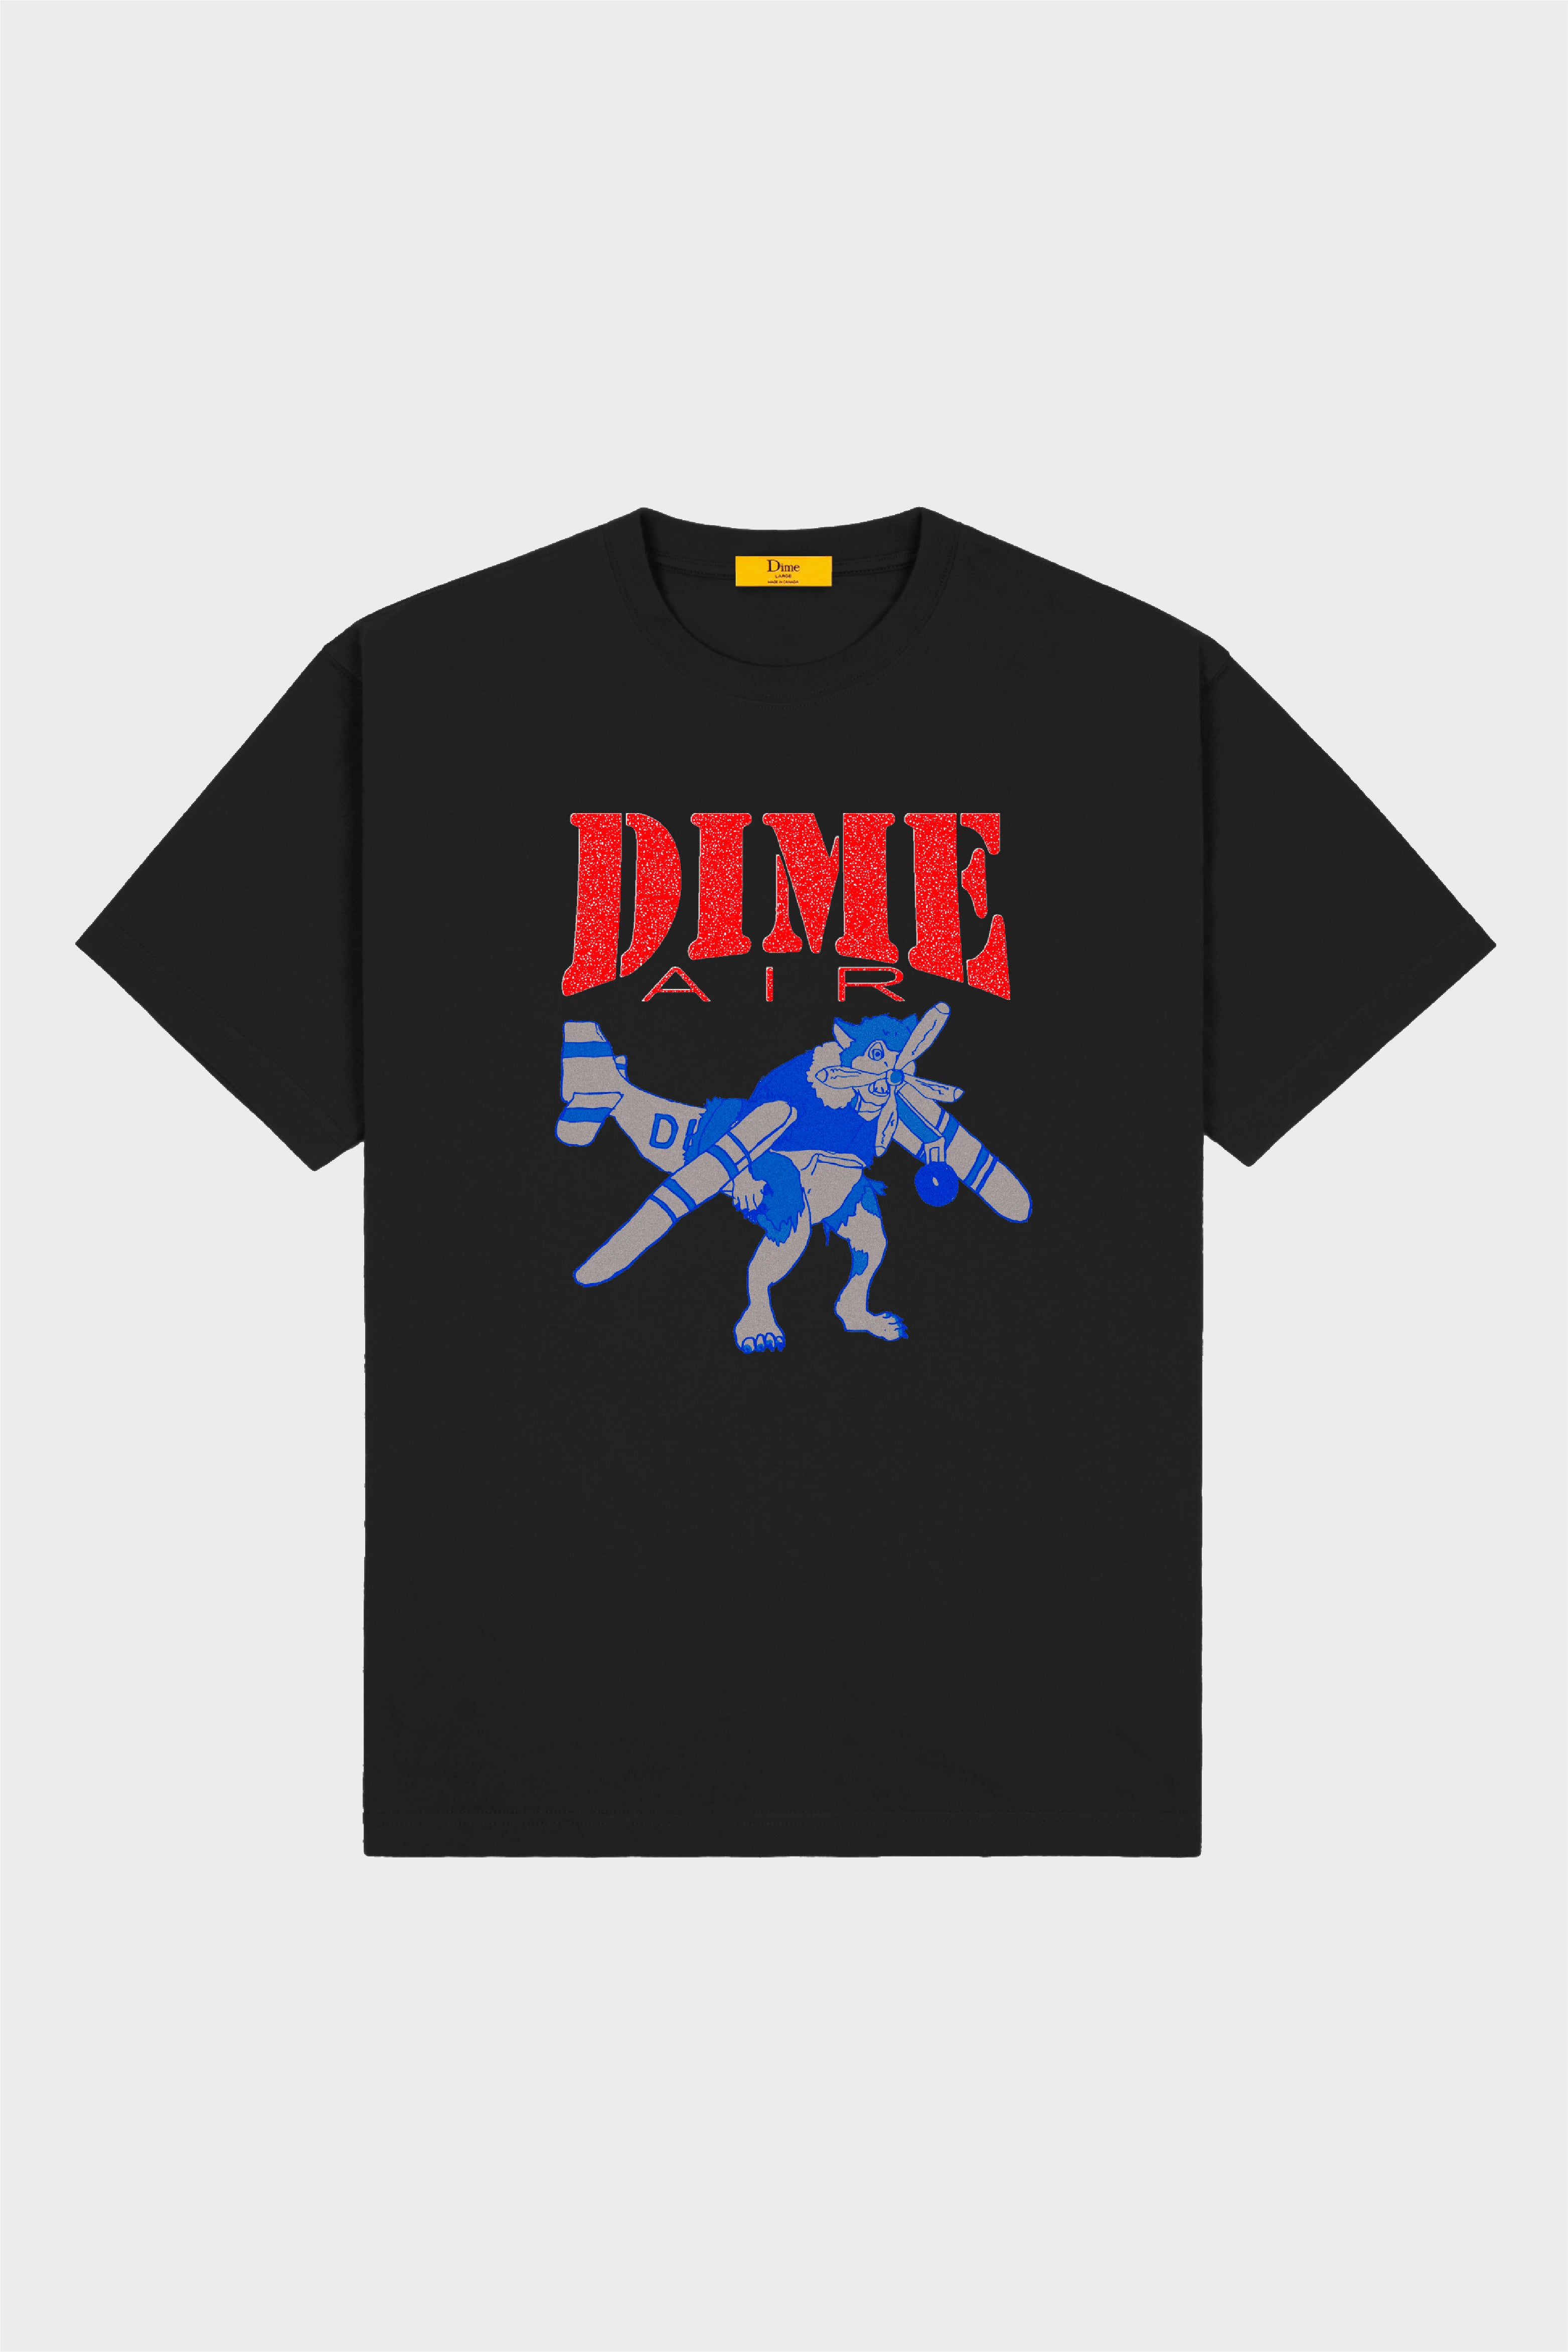 Selectshop FRAME - DIME Dime Air T-Shirt T-Shirts Concept Store Dubai